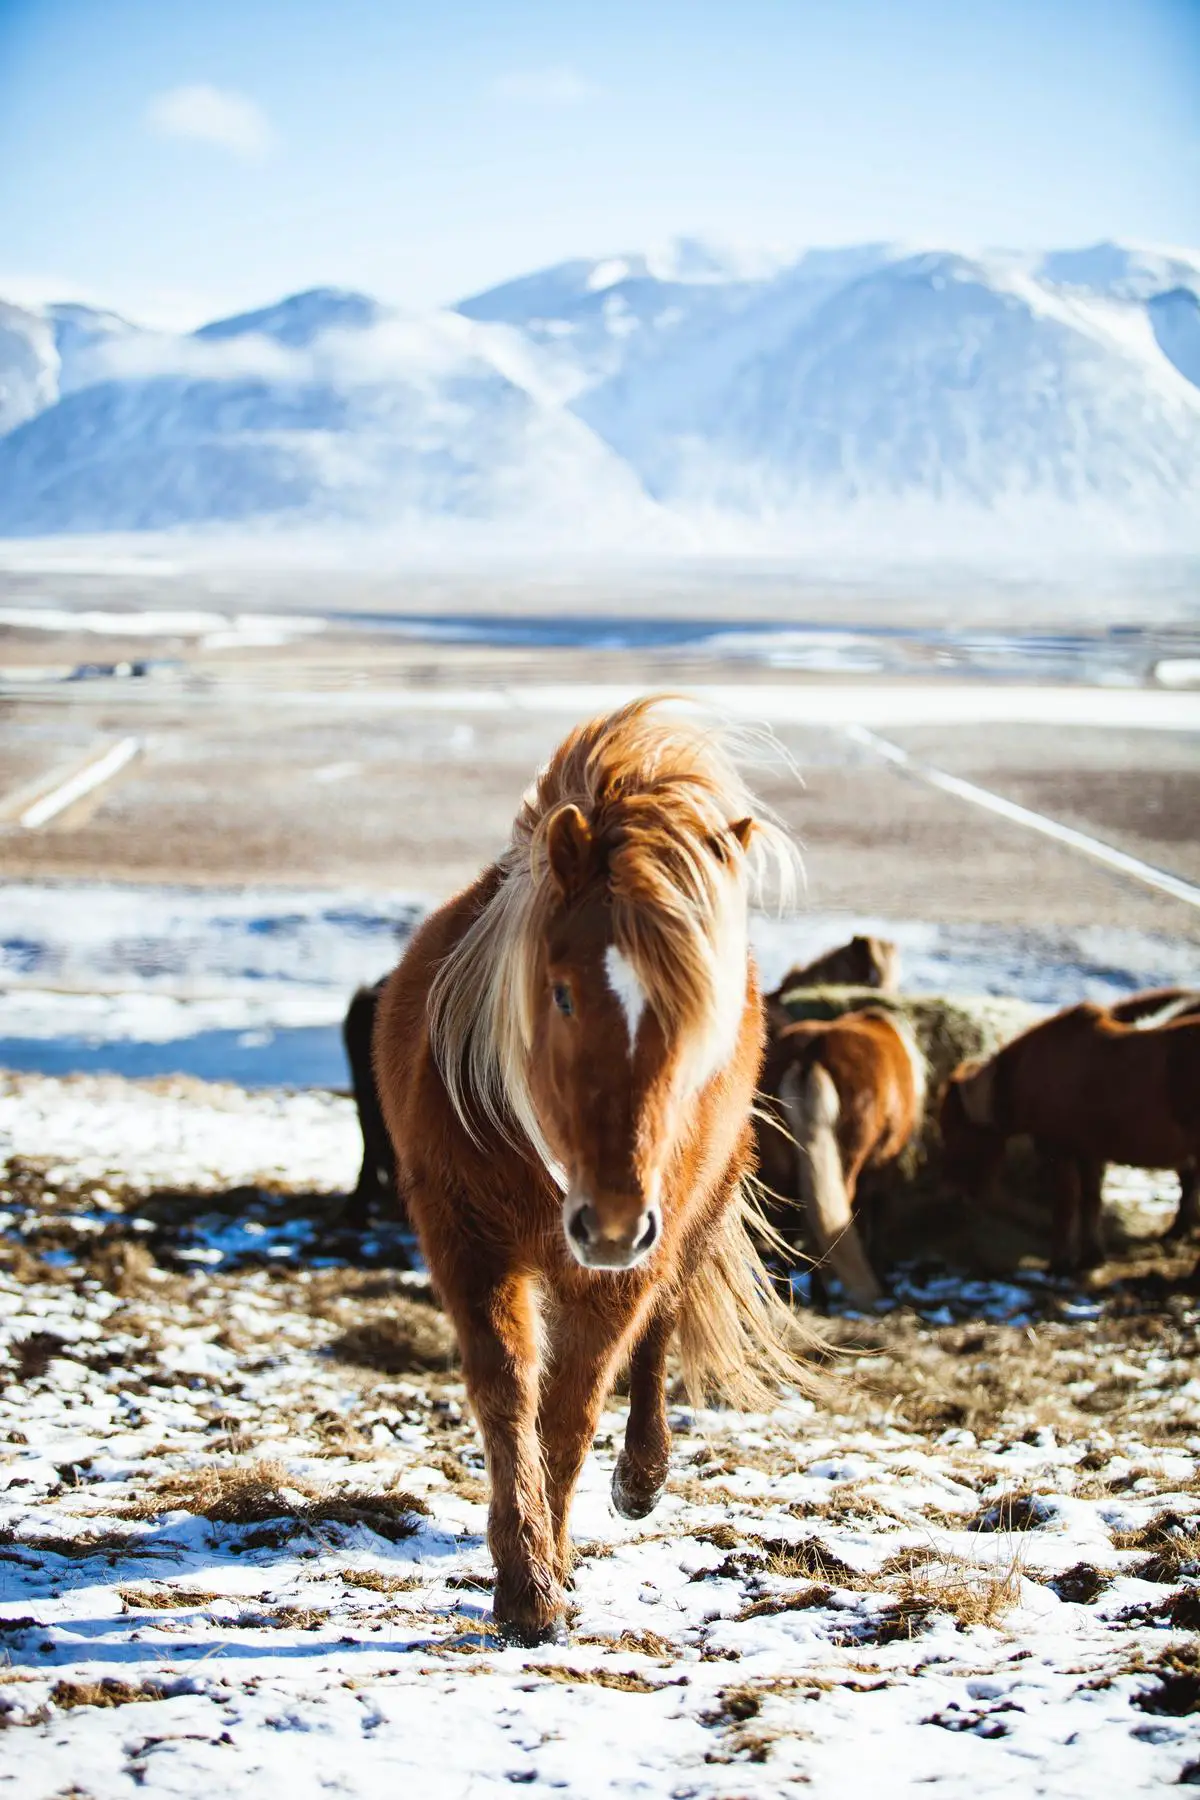 Beautiful image showcasing Swiss horse breeds in their natural habitat